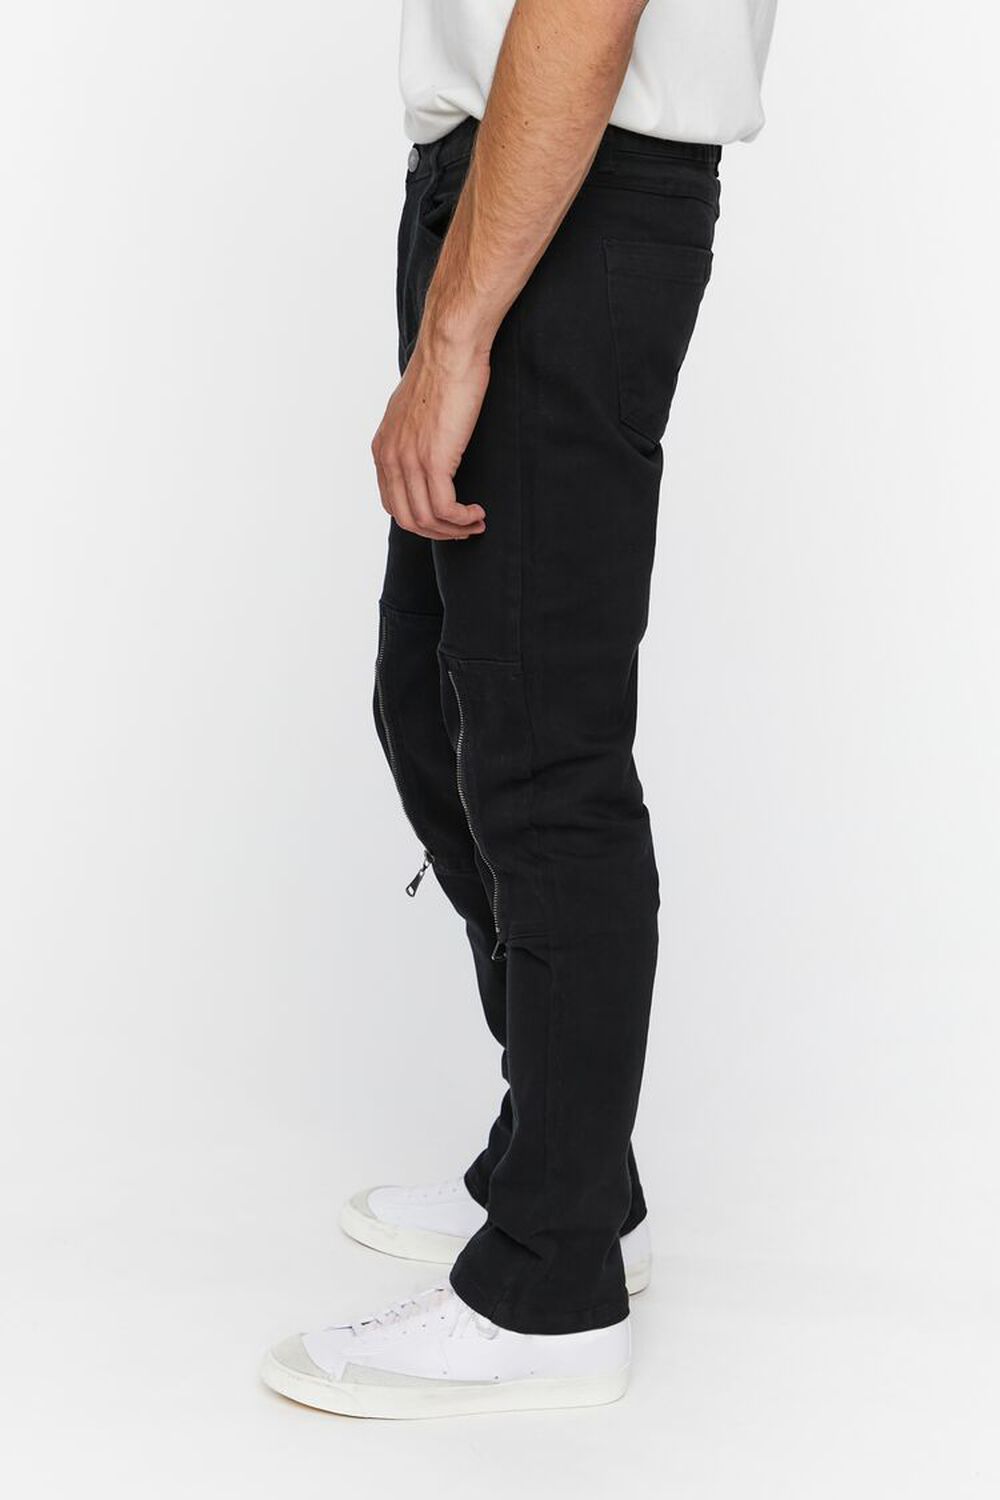 BLACK Twill Slim-Fit Zippered Pants, image 3